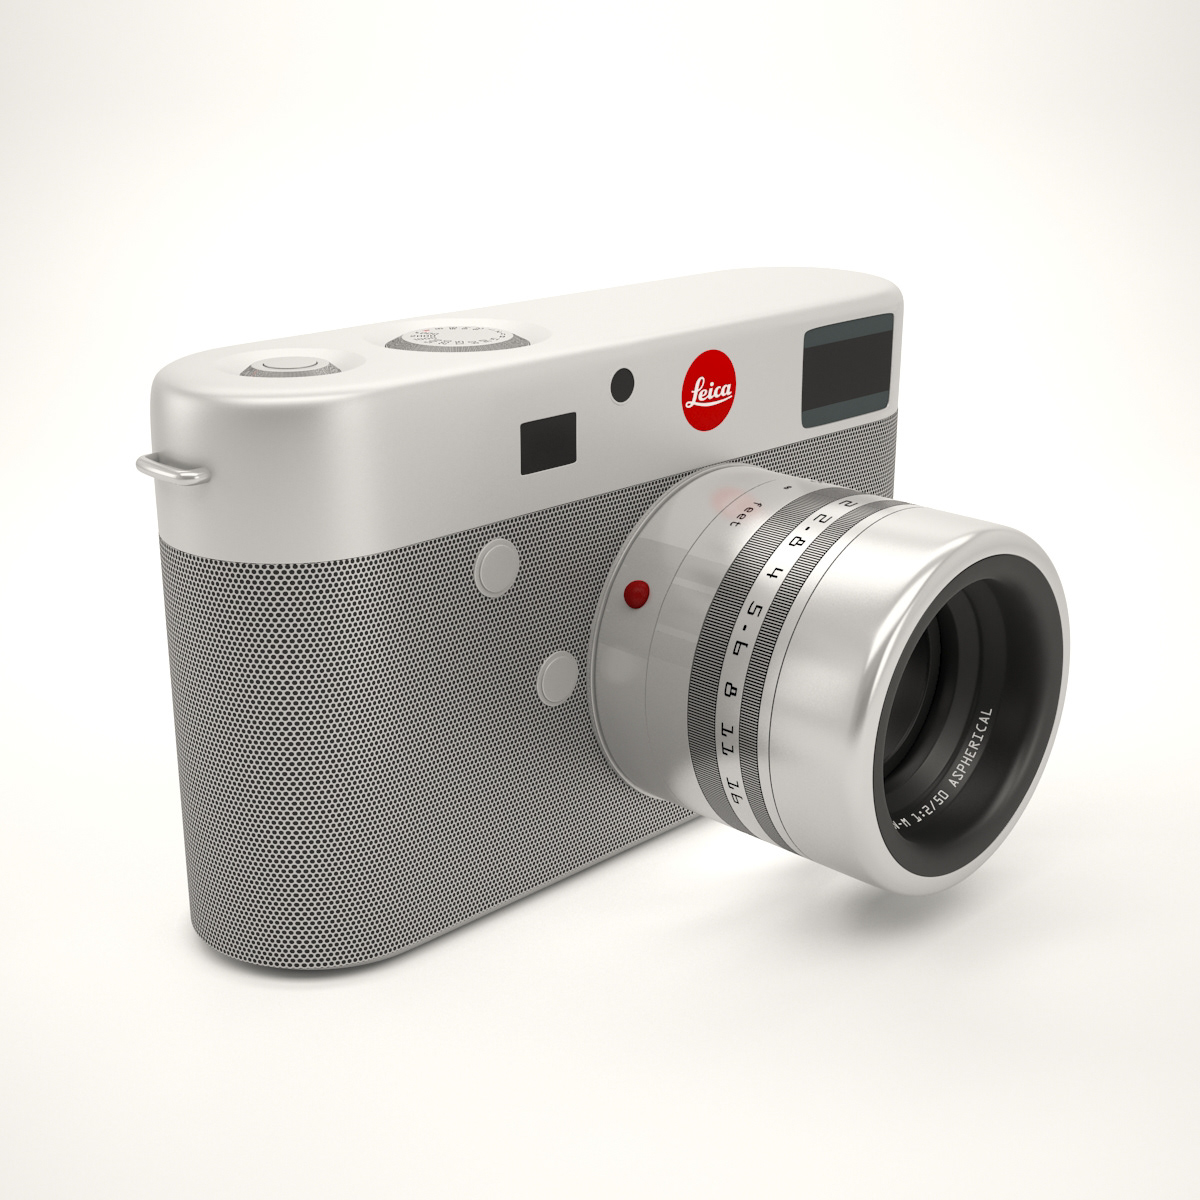 camera Leica marc newson red